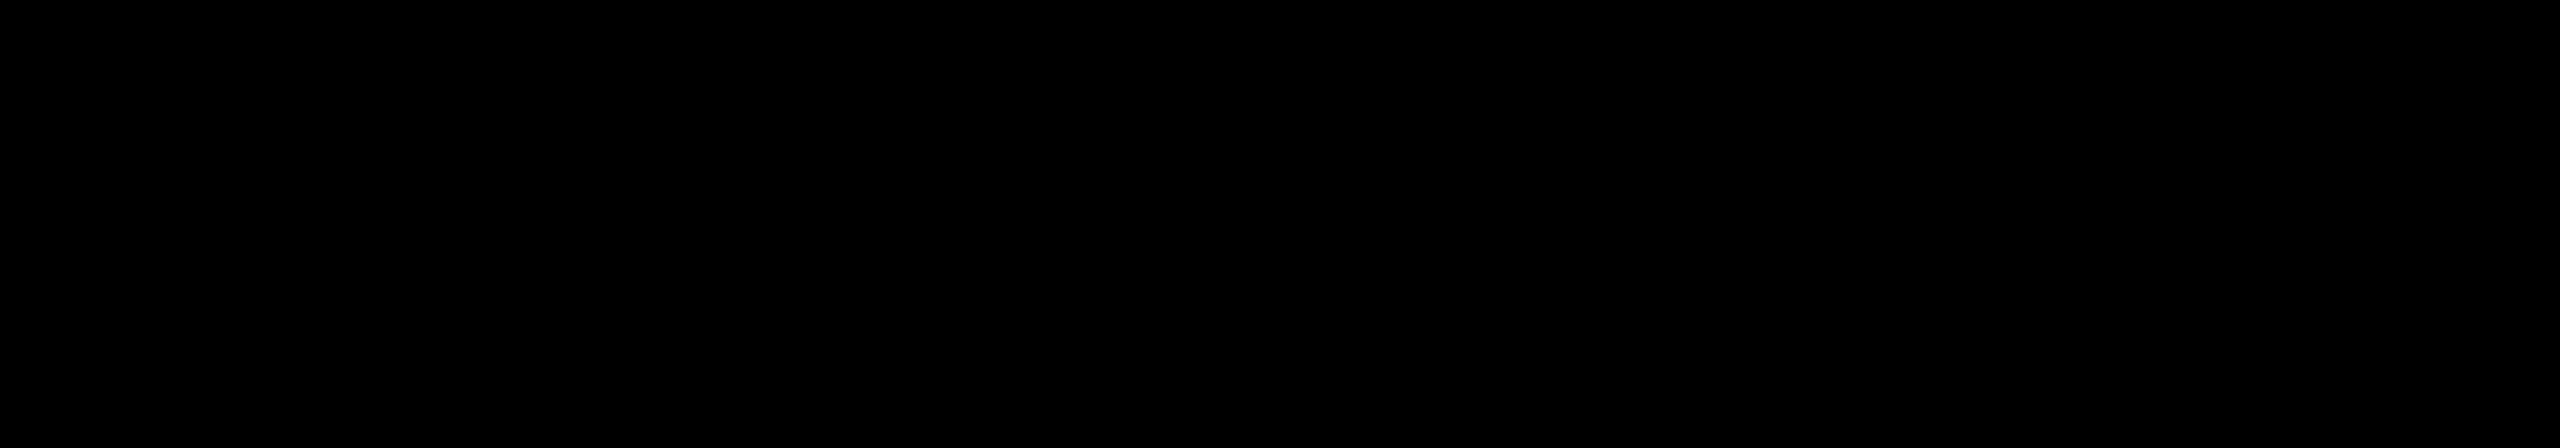 KANGMIN PARK's profile banner